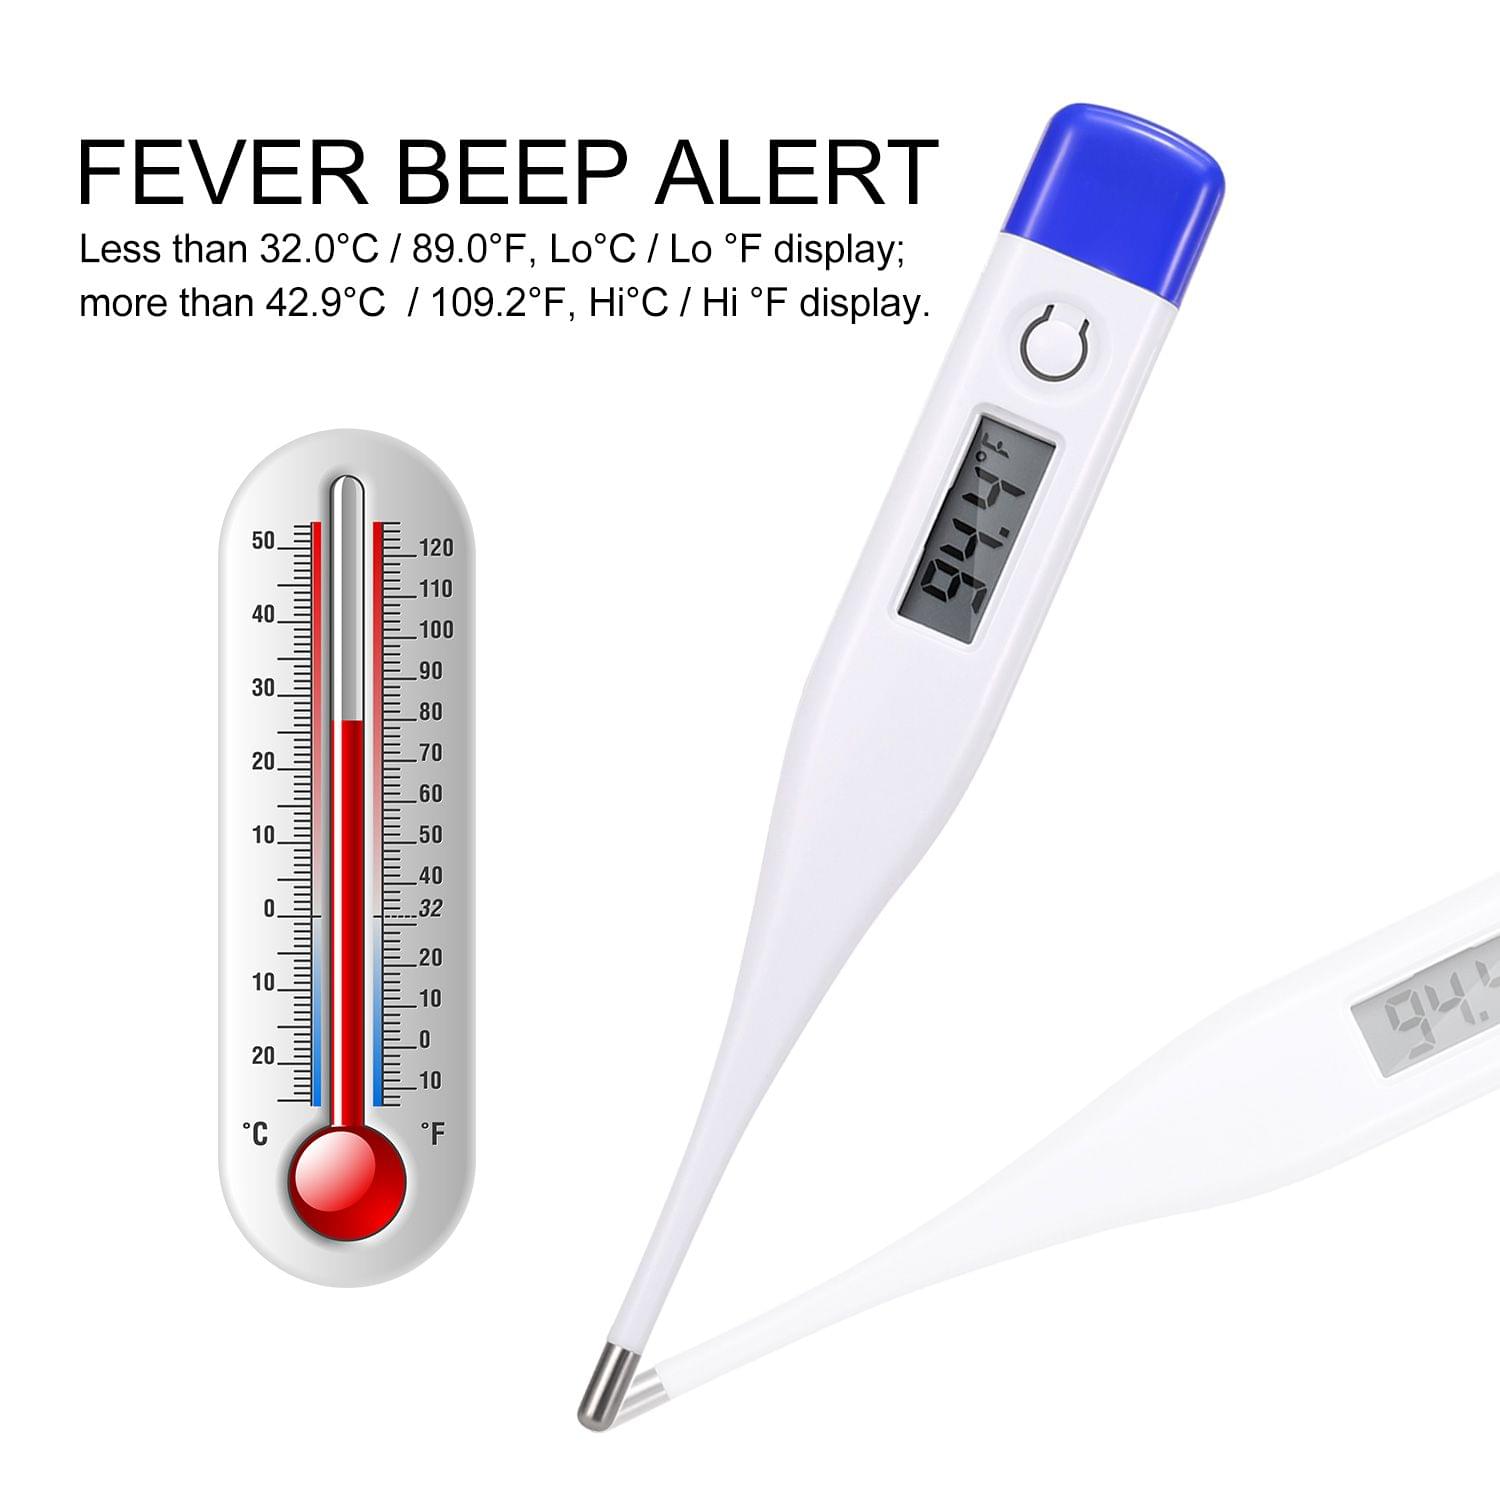 Digital Thermometer Beeper Alarm Mercury Free Auto Shut-off